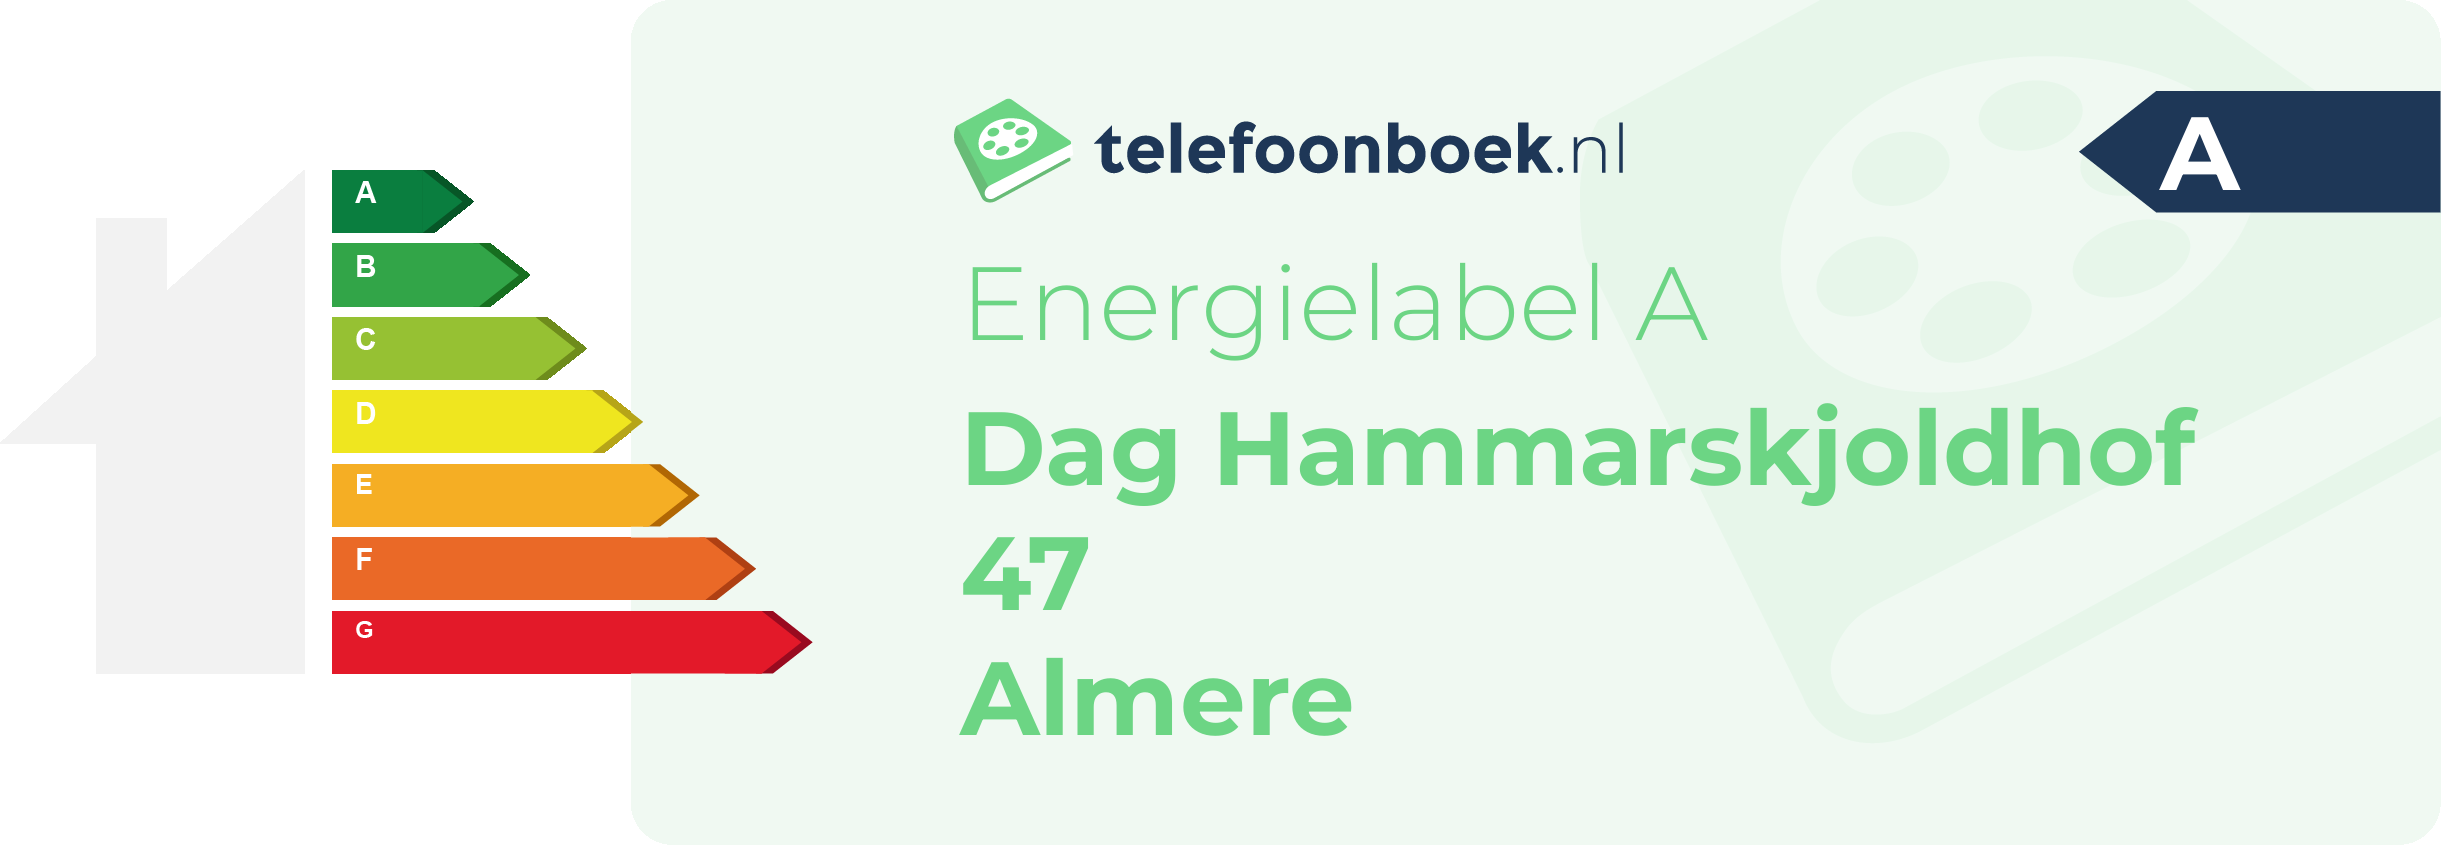 Energielabel Dag Hammarskjoldhof 47 Almere